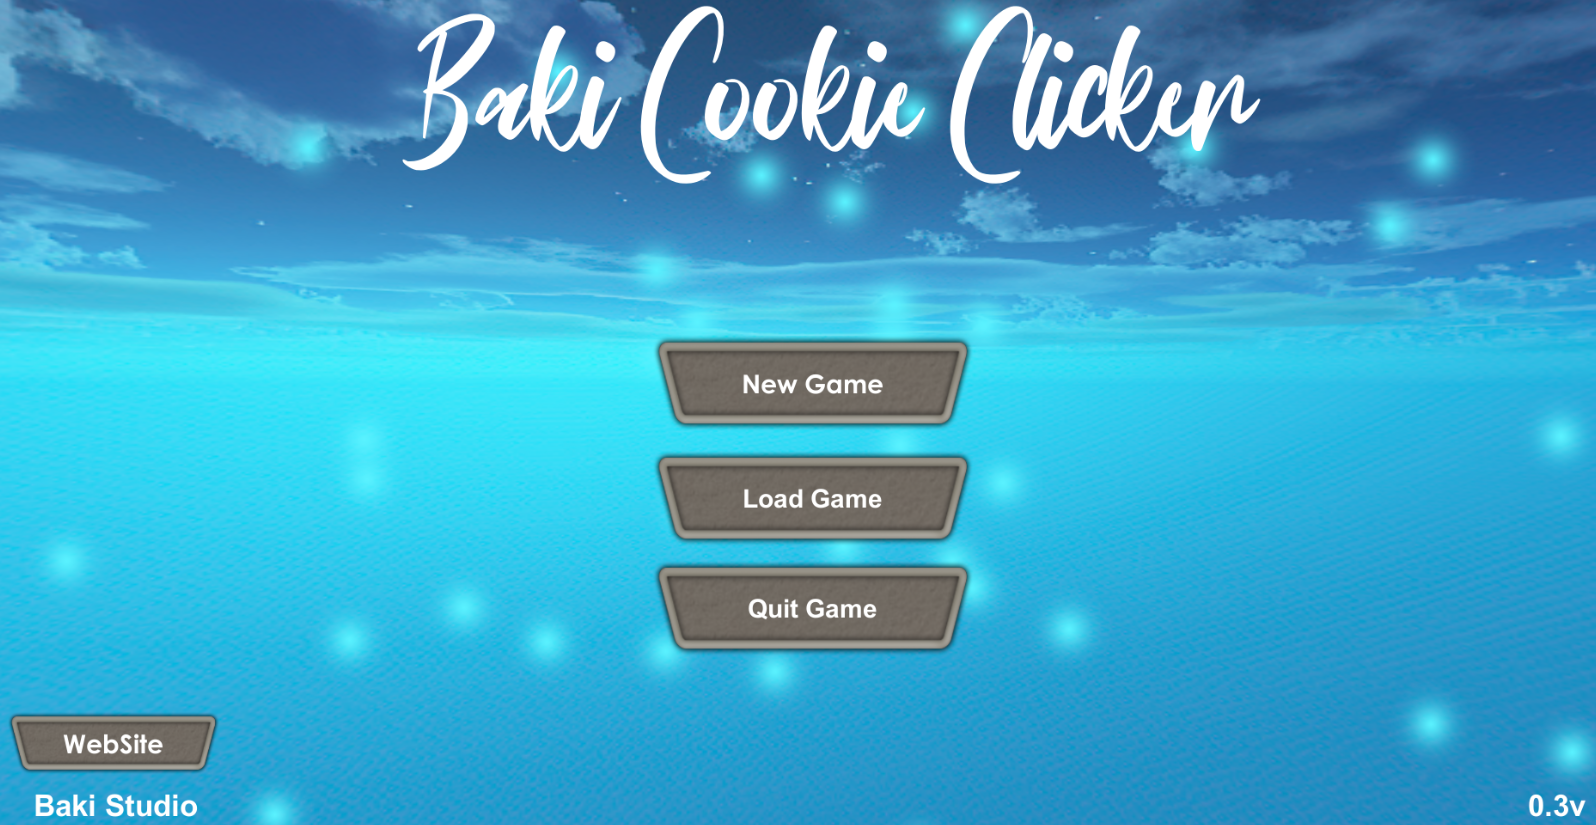 Baki Cookie Clicker